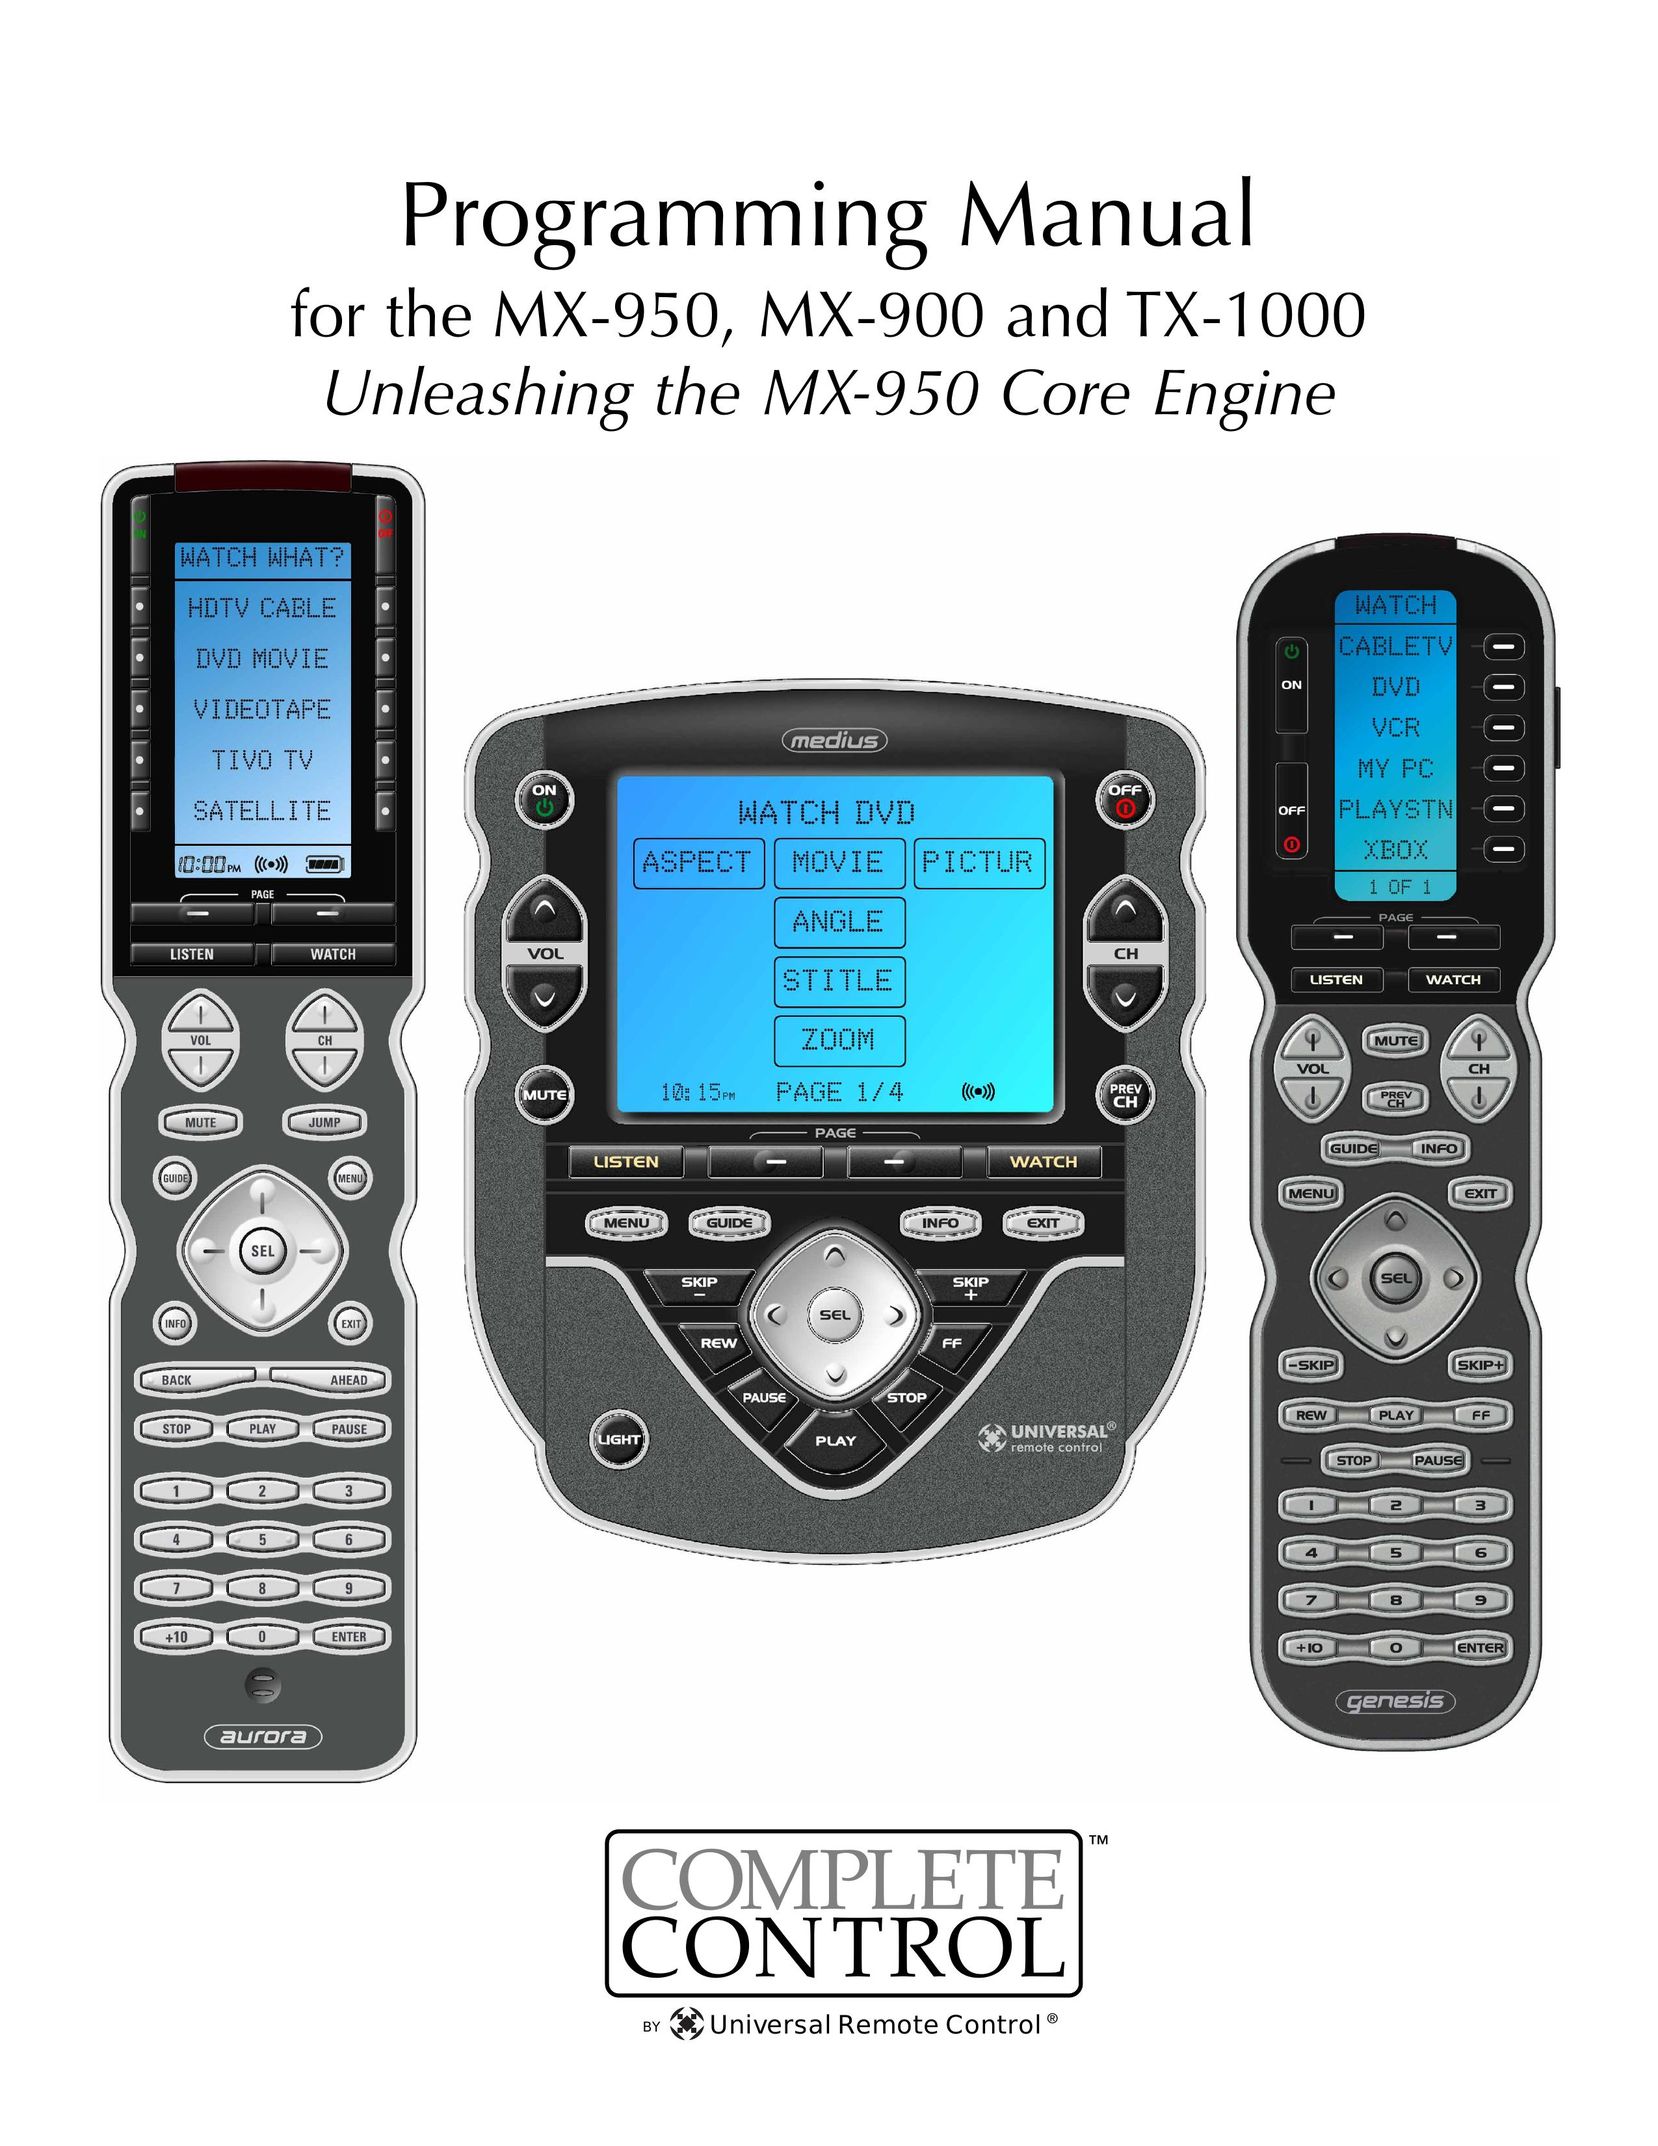 Universal Remote Control MX-900 Universal Remote User Manual